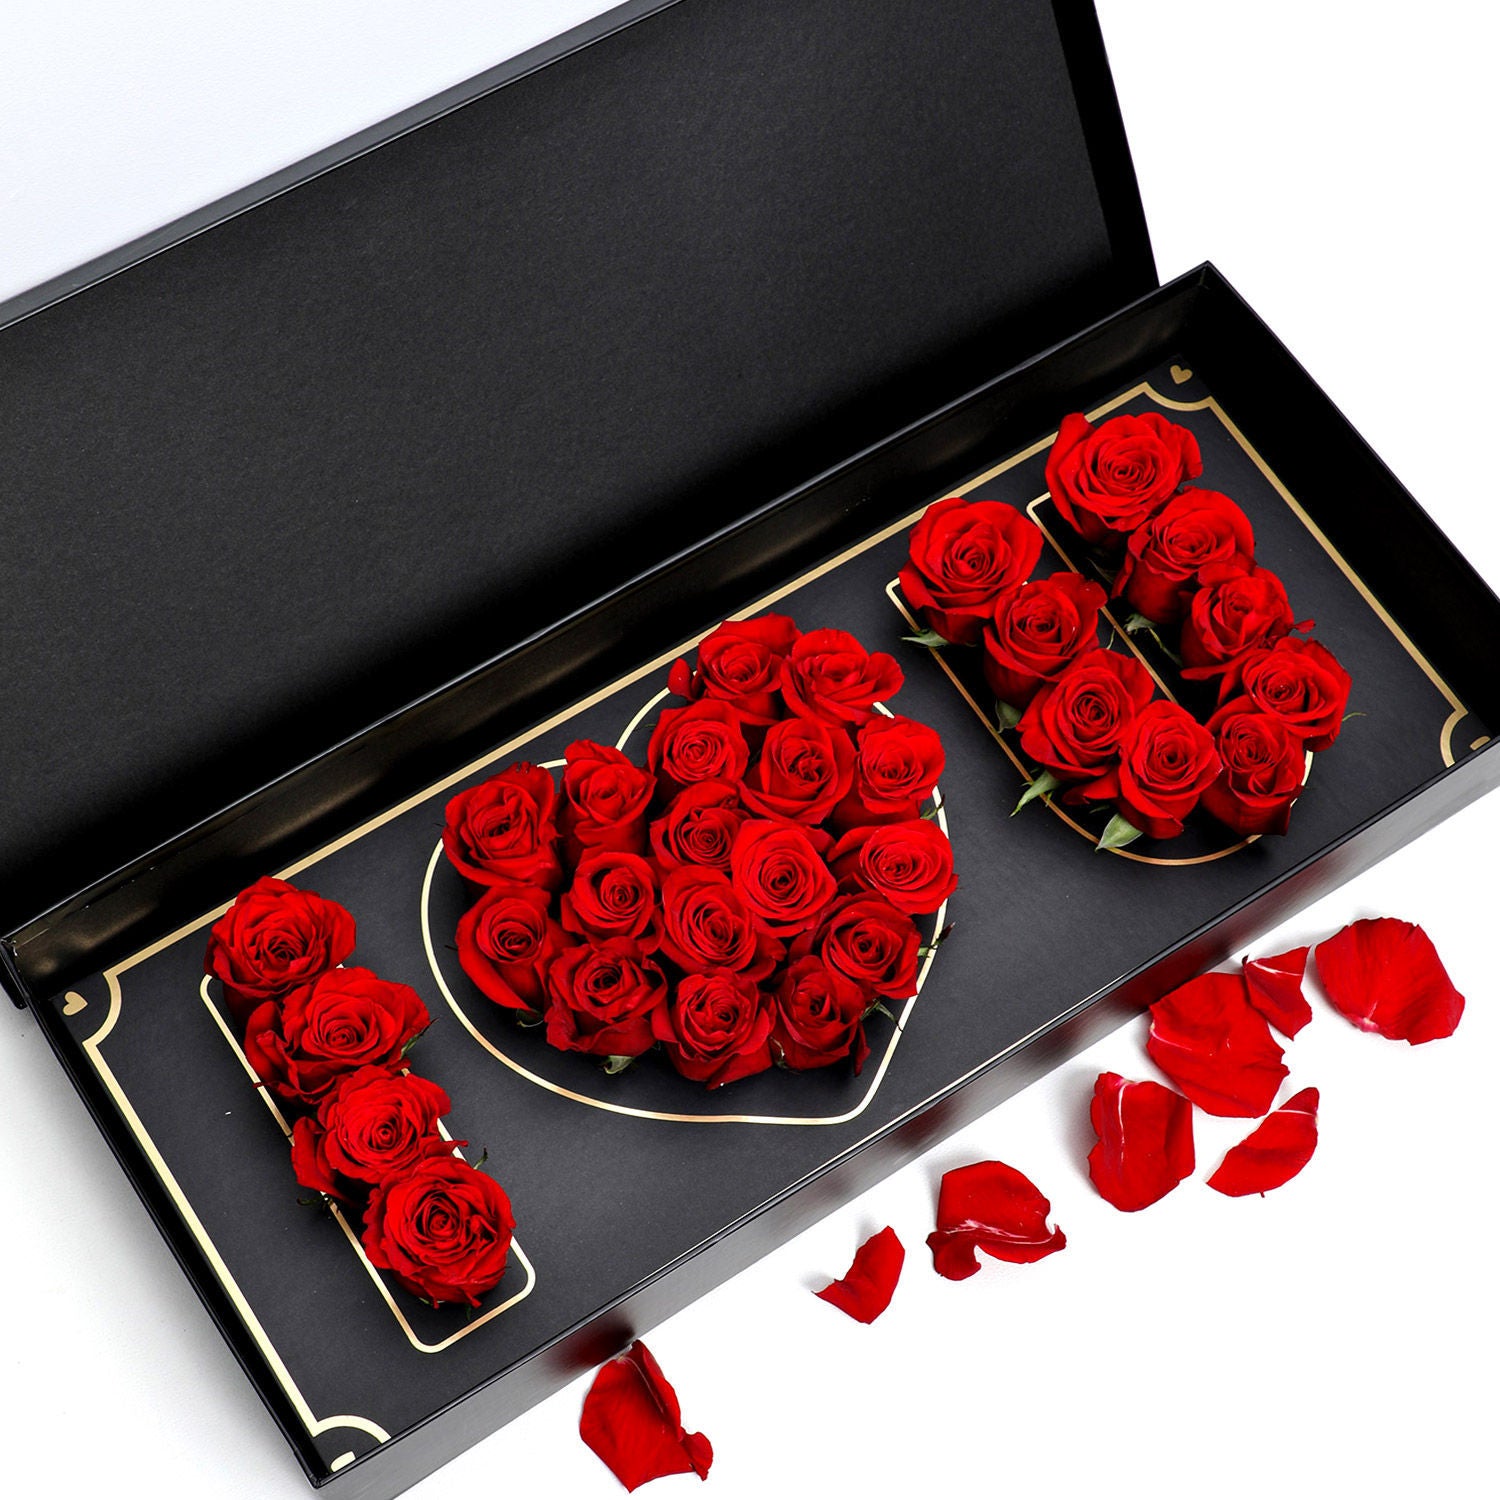 I Love You Red Roses Box Arrangement